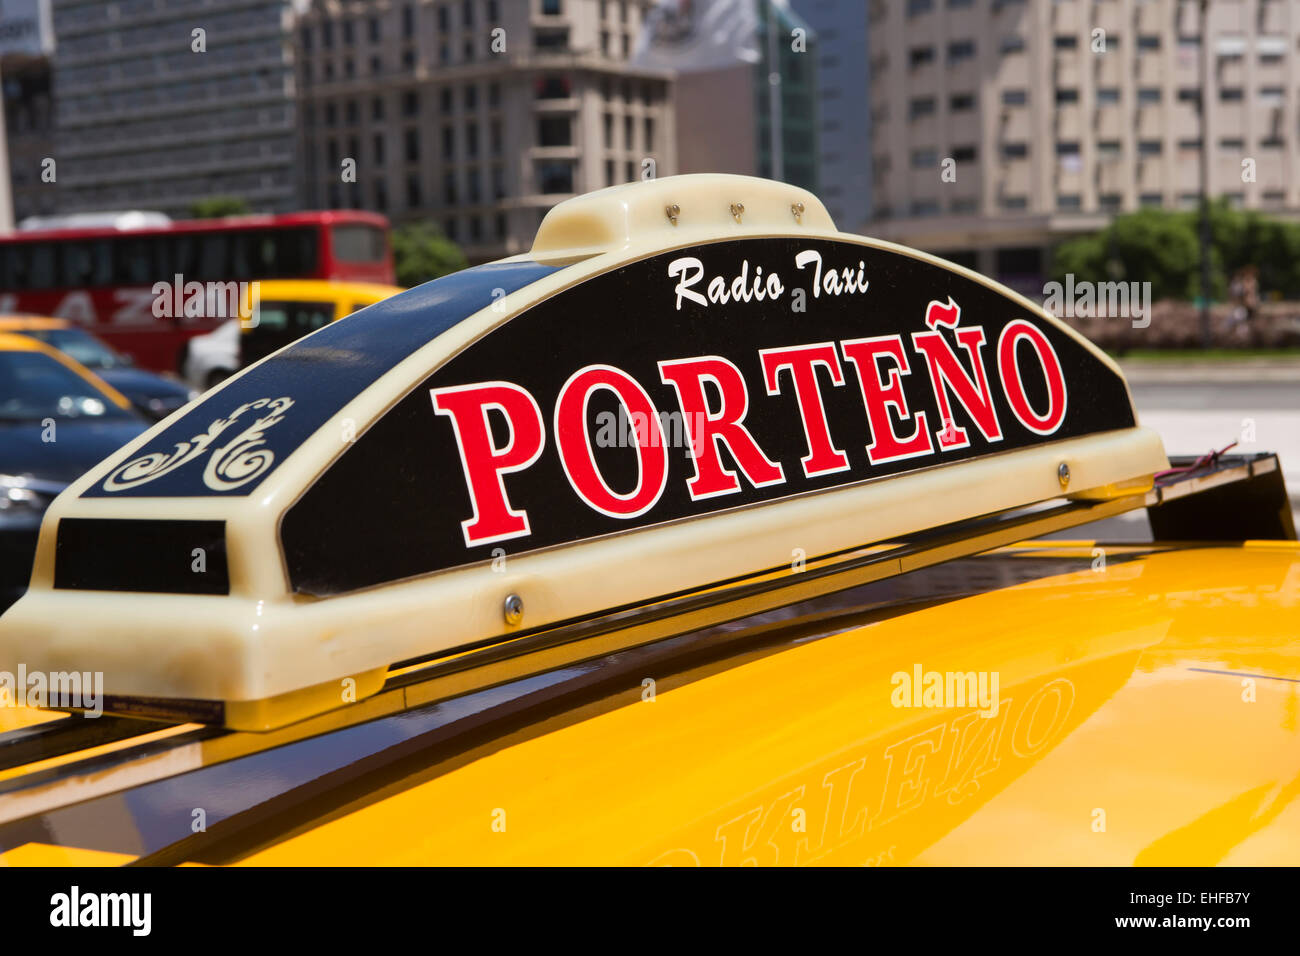 L'ARGENTINE, Buenos Aires, Porteno radio taxi signe sur le dessus de la  cabine Photo Stock - Alamy